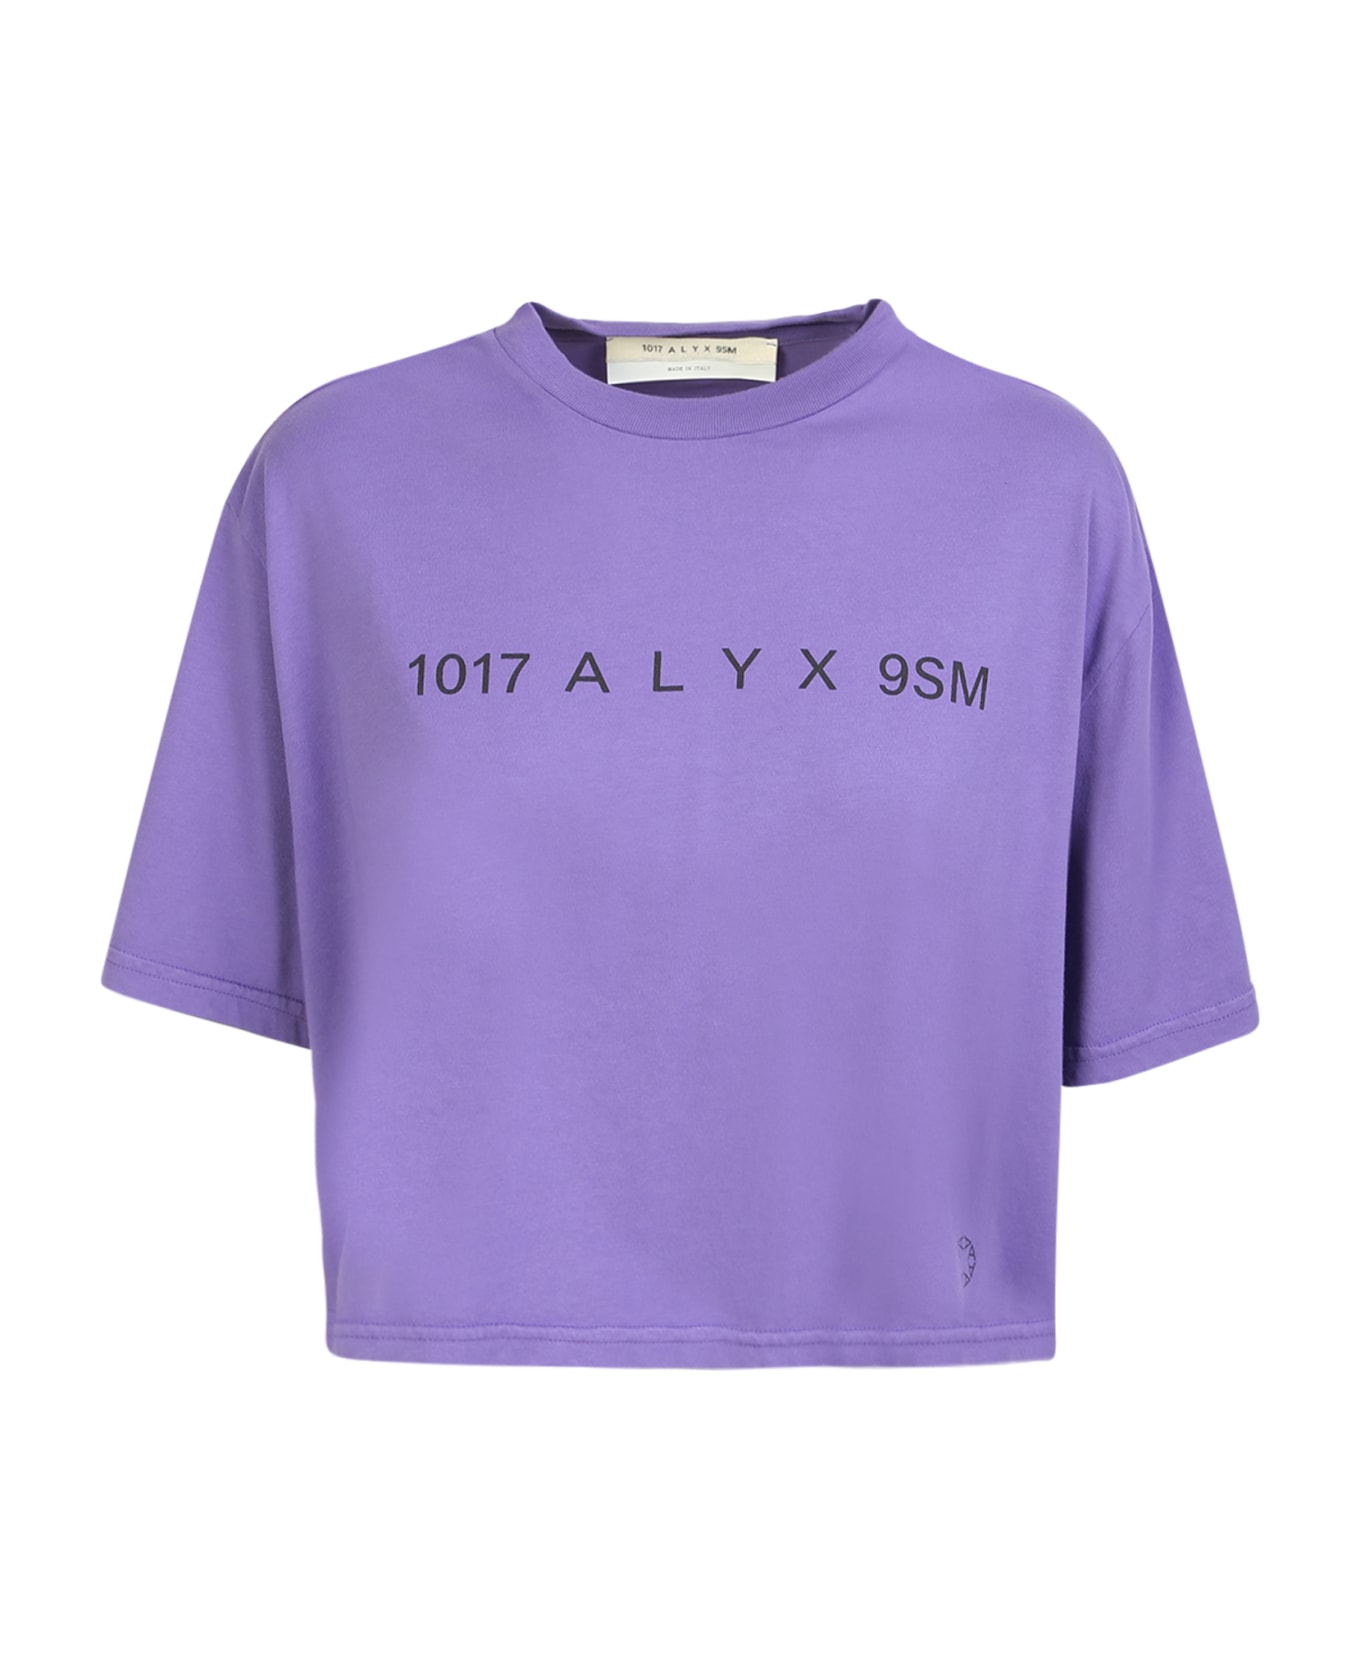 1017 ALYX 9SM T-shirt - Purple